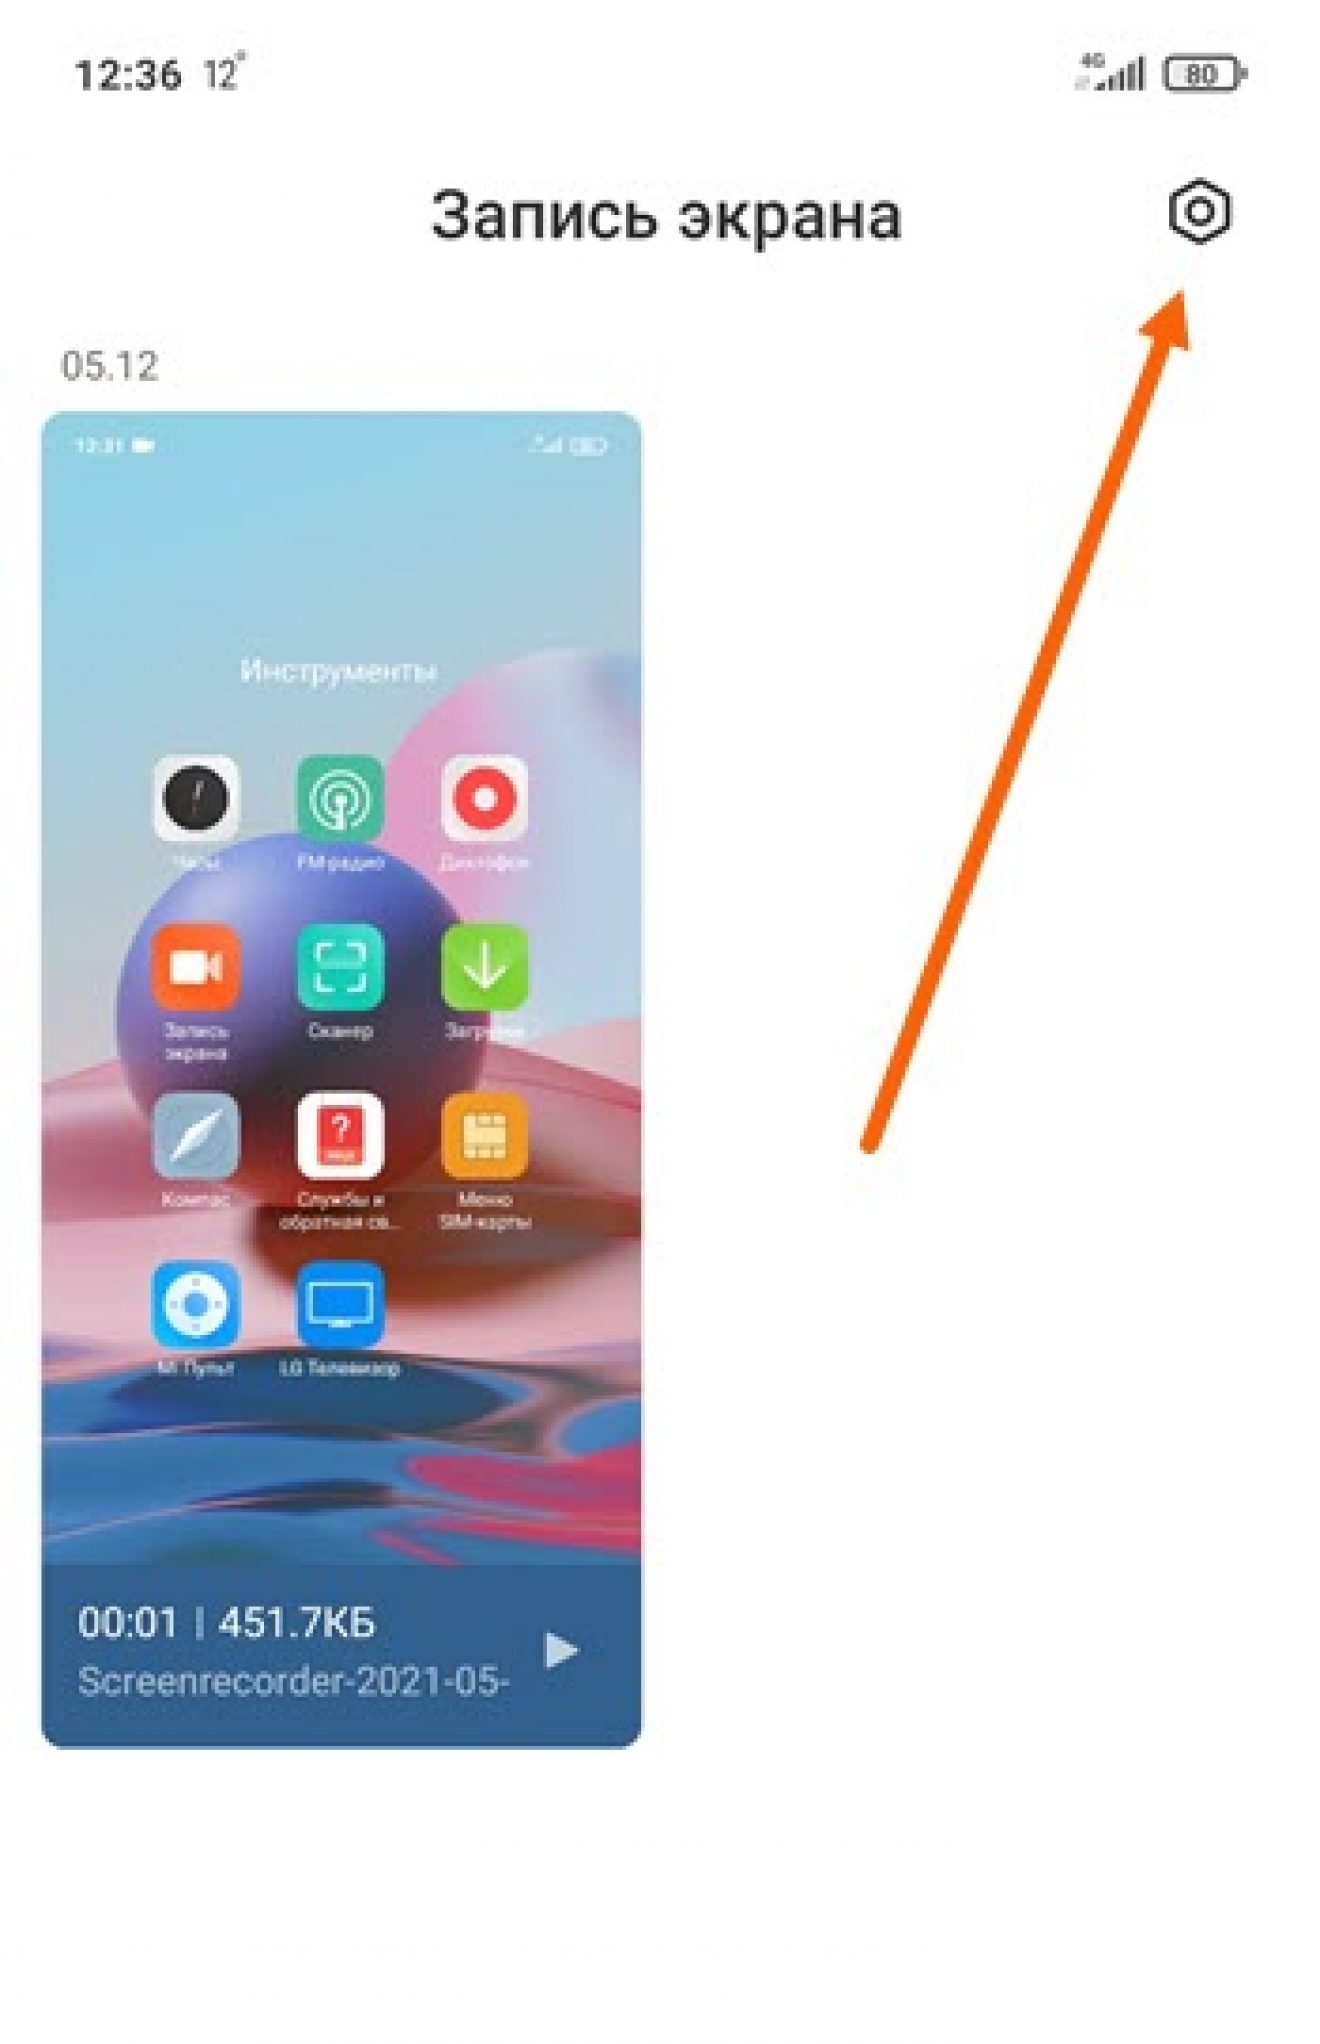 Xiaomi без звука. Как записать экран телефона со звуком Xiaomi. Как записать звук с экрана телефона ксиоми. Если у телефона Xiaomi 10 запись экрана.